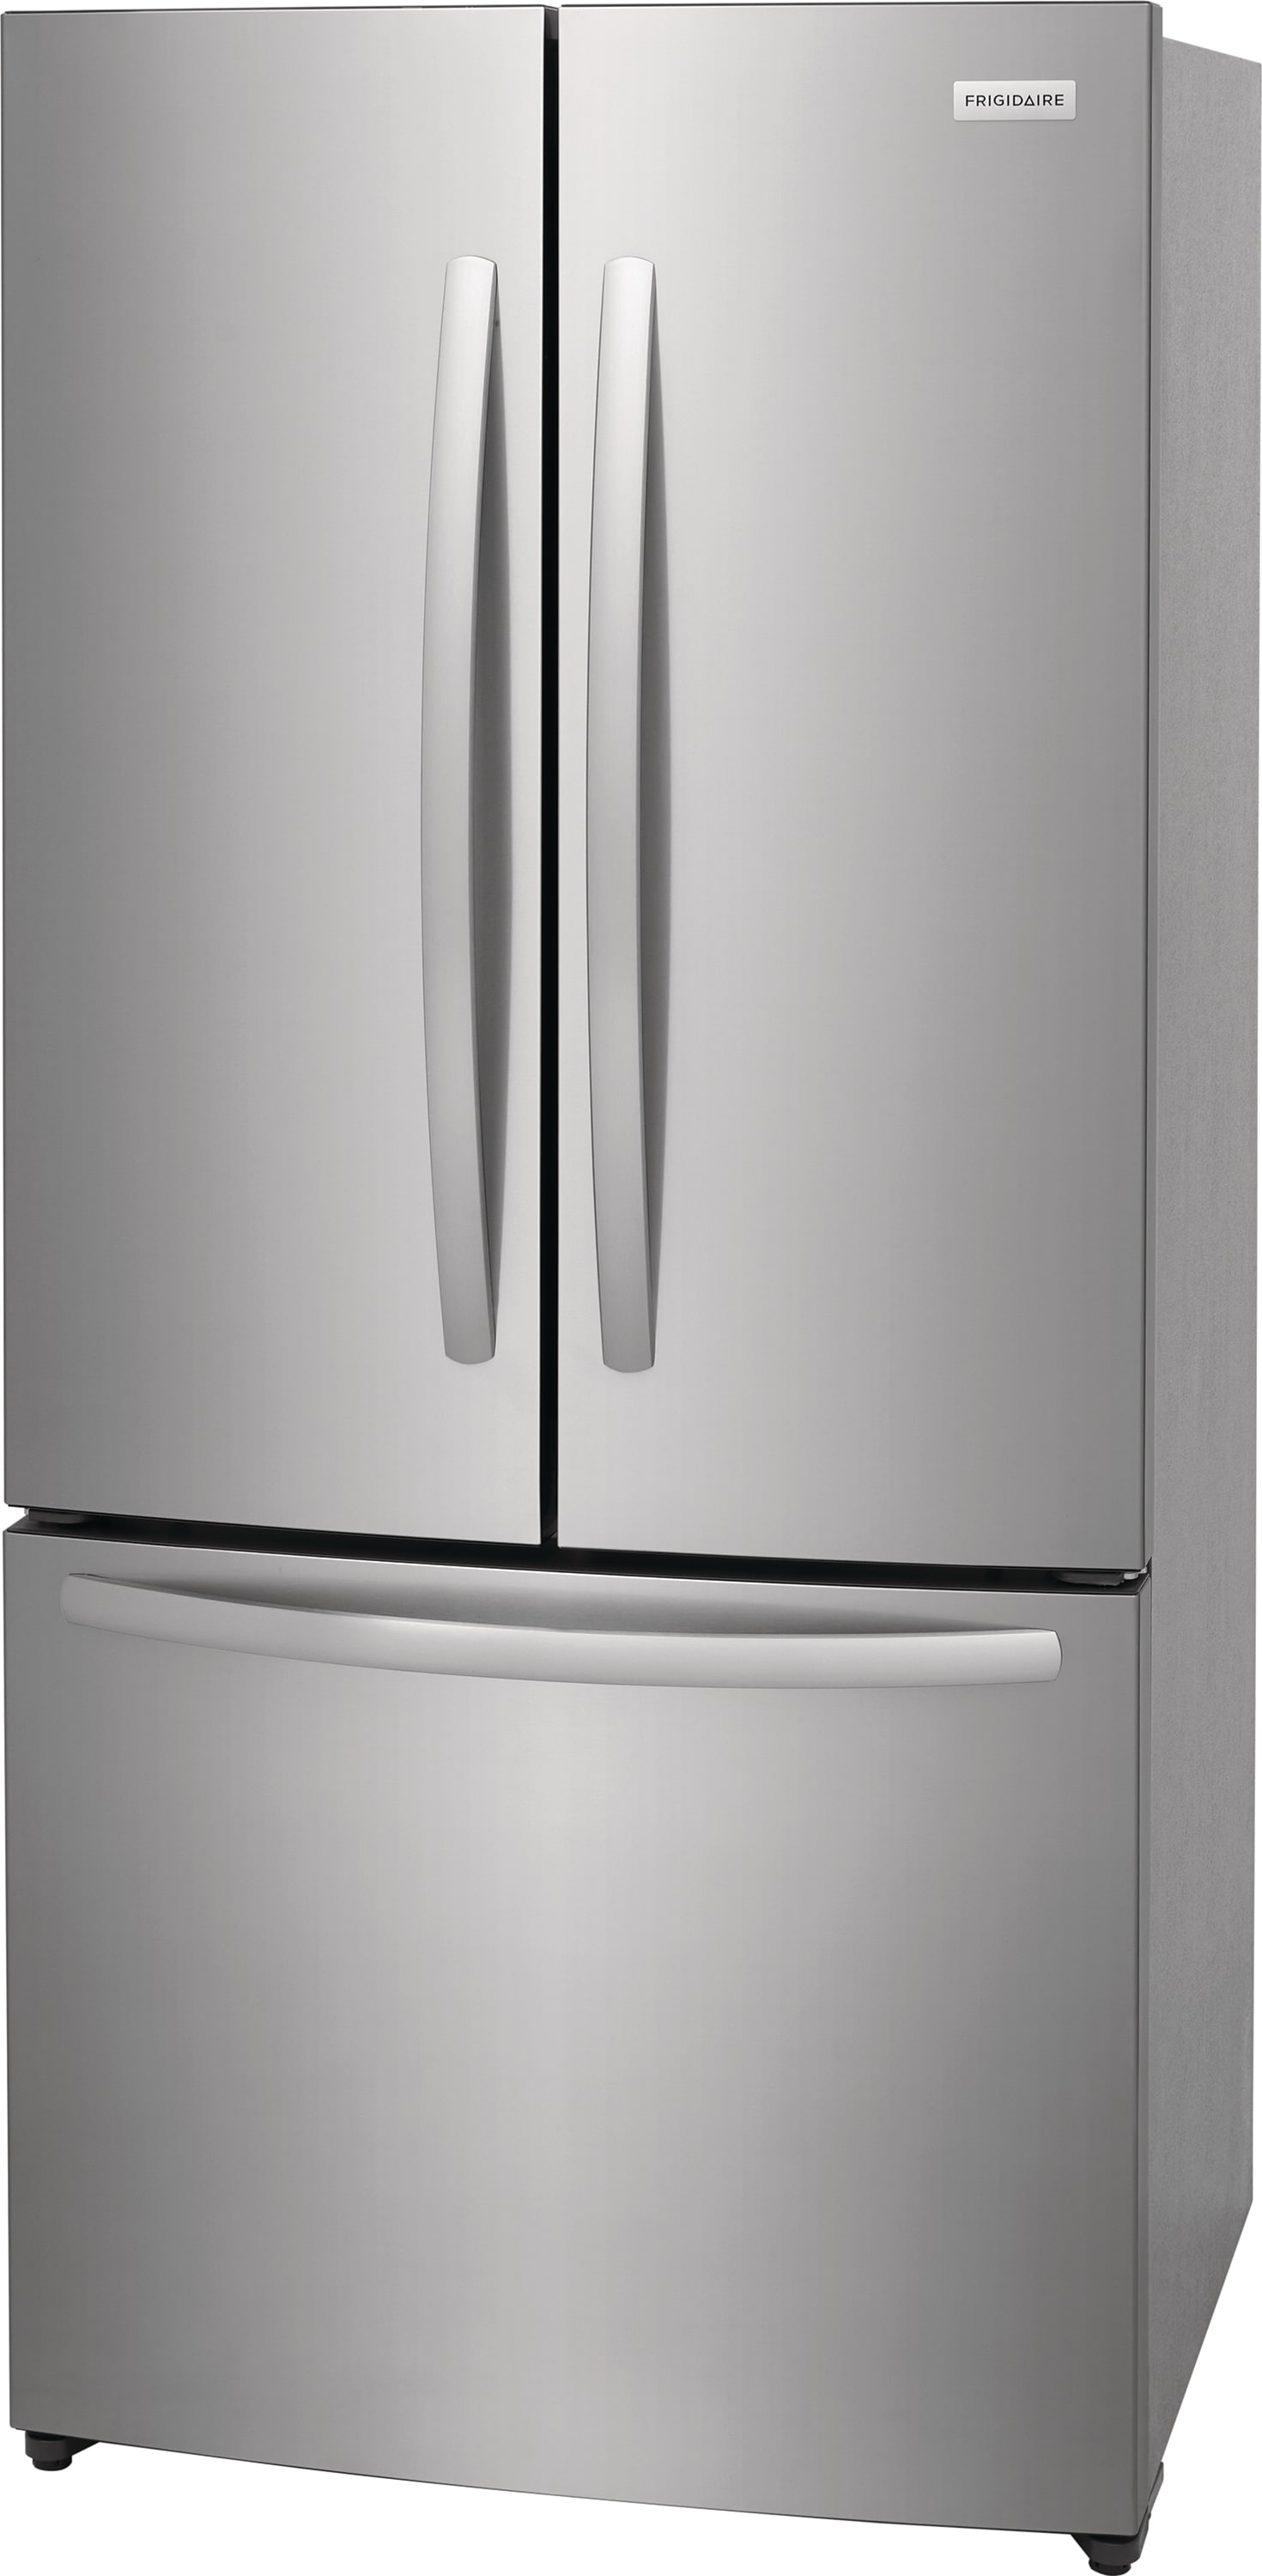 30 Wide Counter Depth Refrigerators